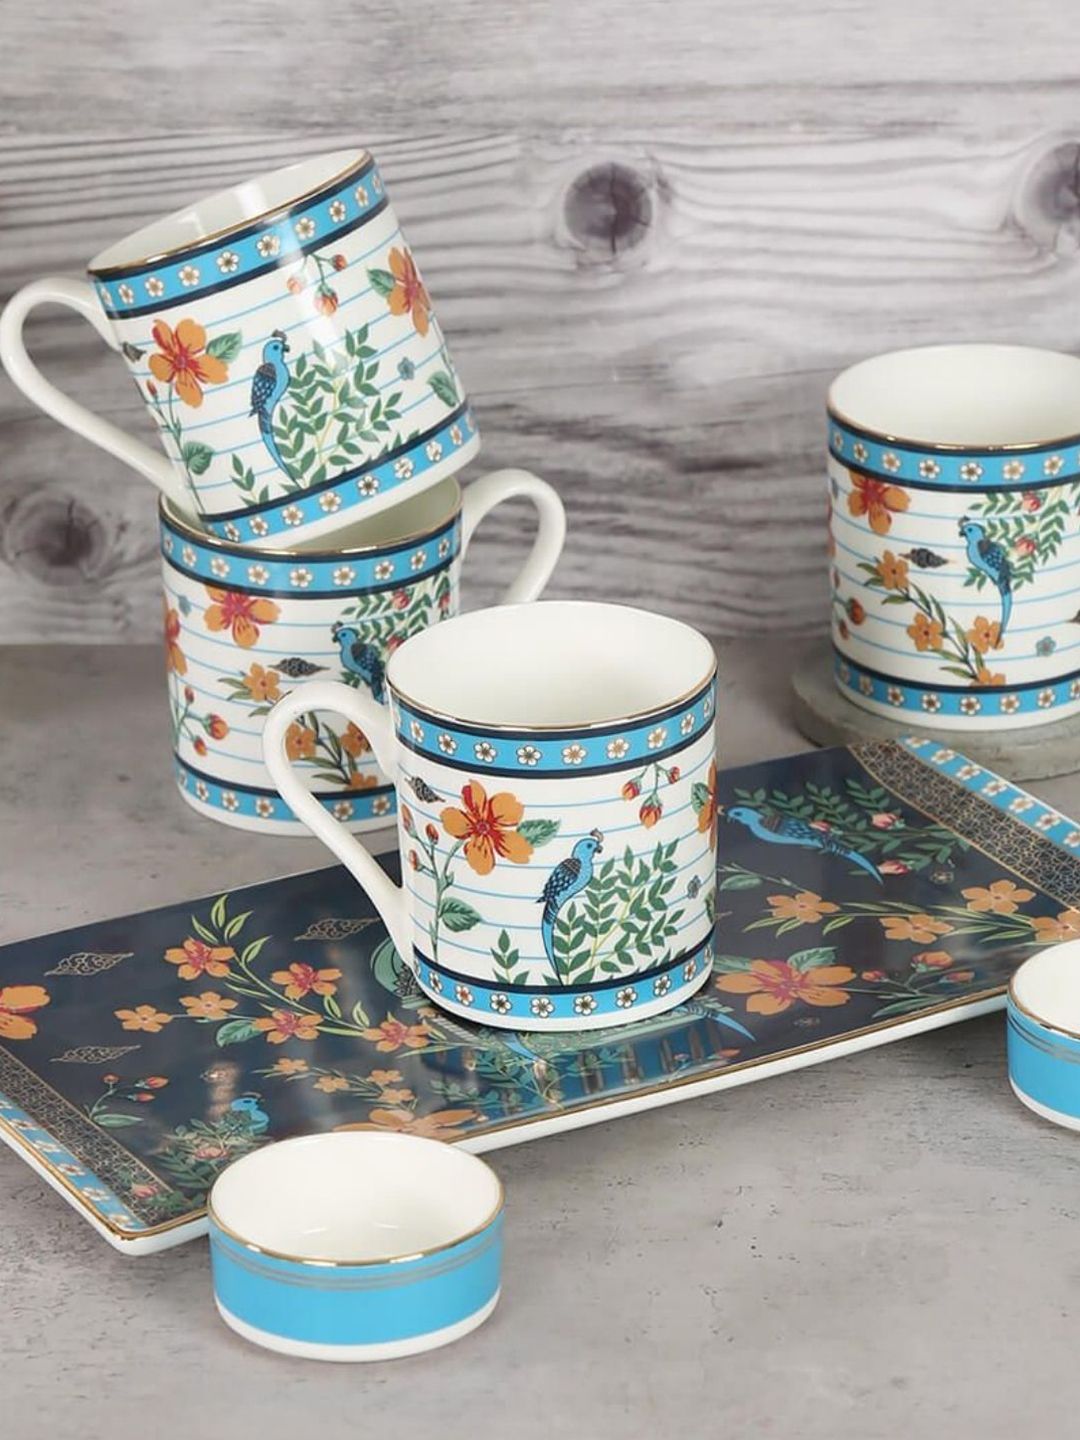 India Circus Blue & Orange Floral Printed Set of 7 Ceramic Glossy Mug, Tray and Bowl Price in India